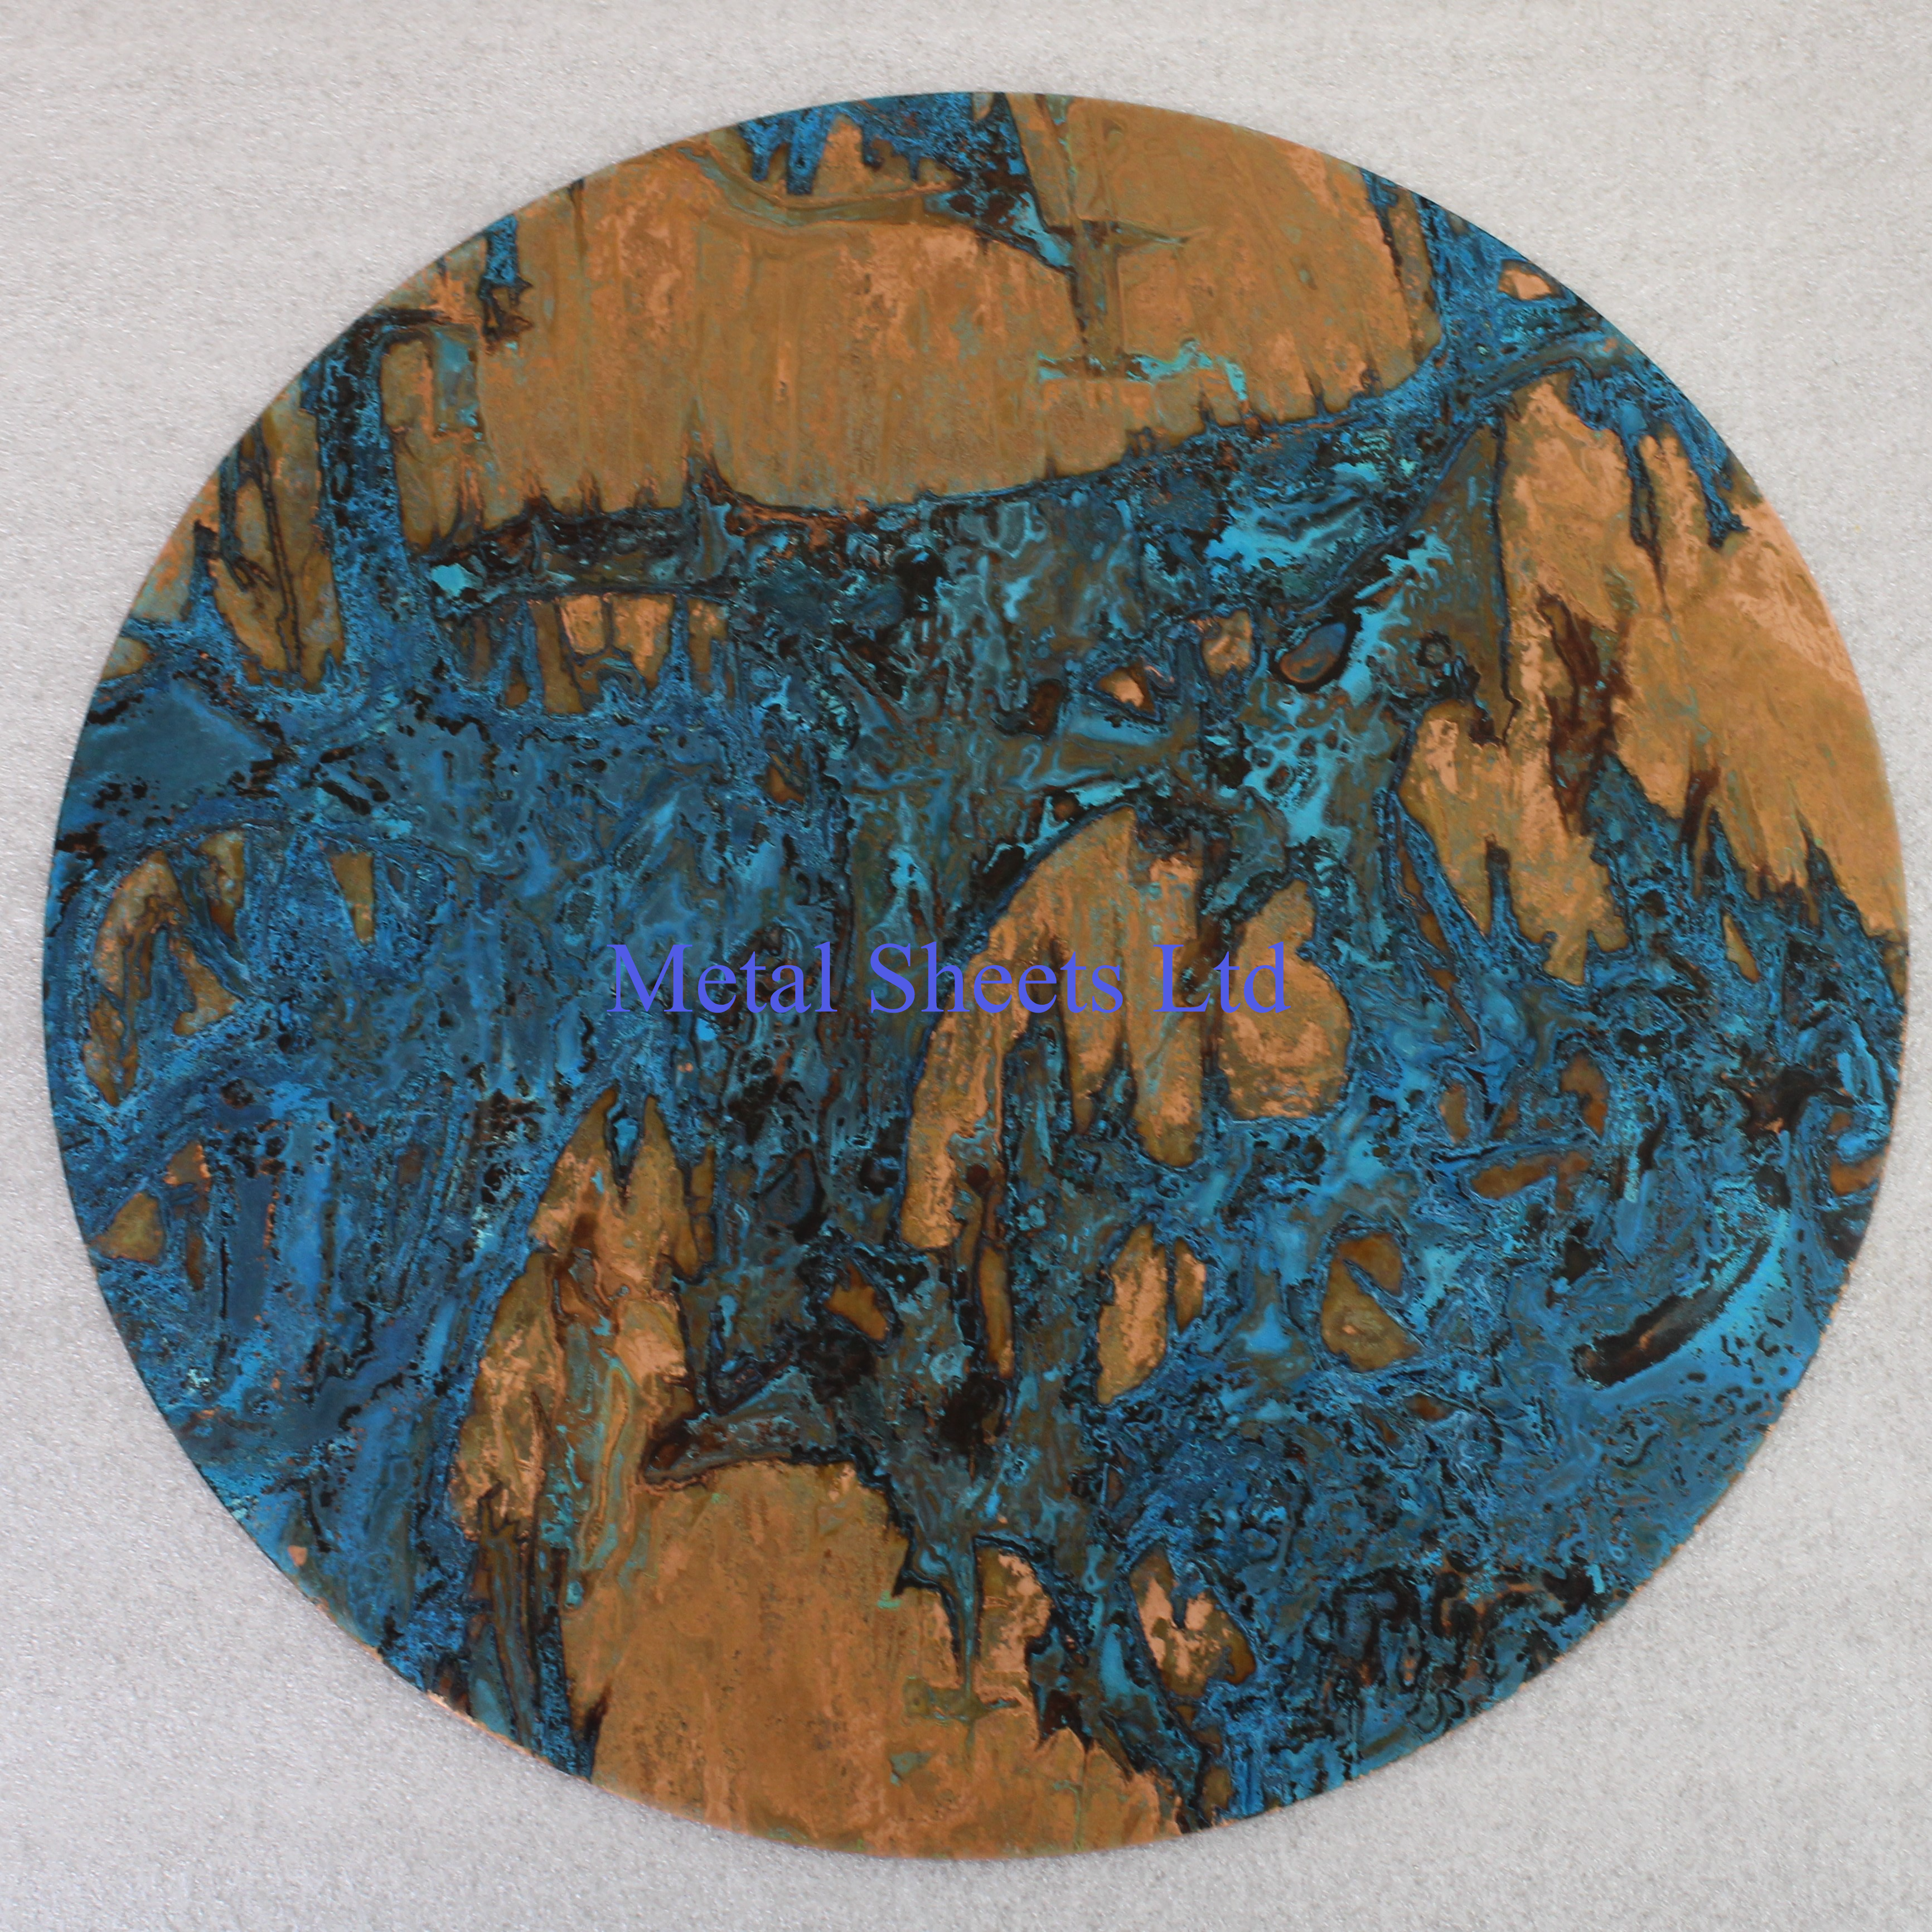 blue copper sheet
patina images